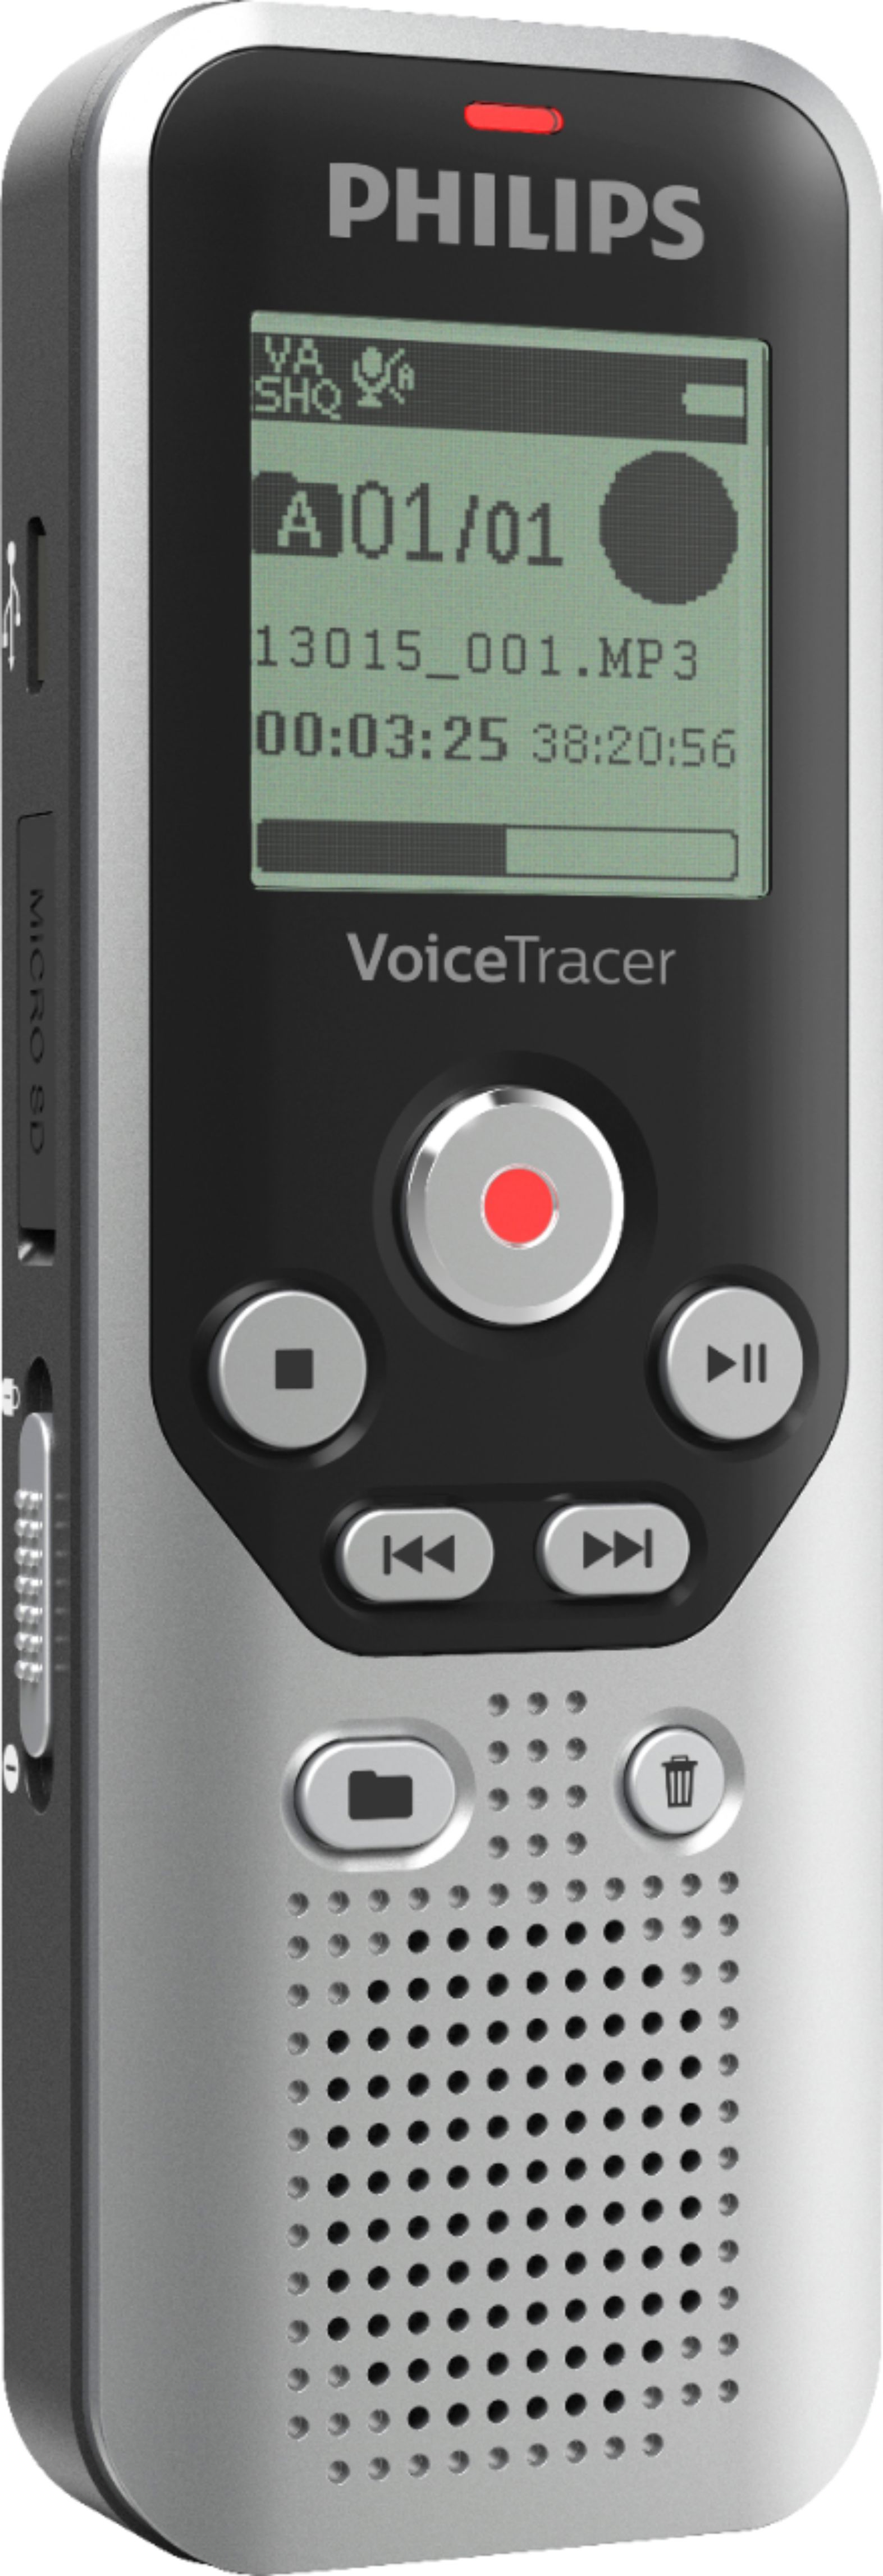 Philips VoiceTracer DVT2015